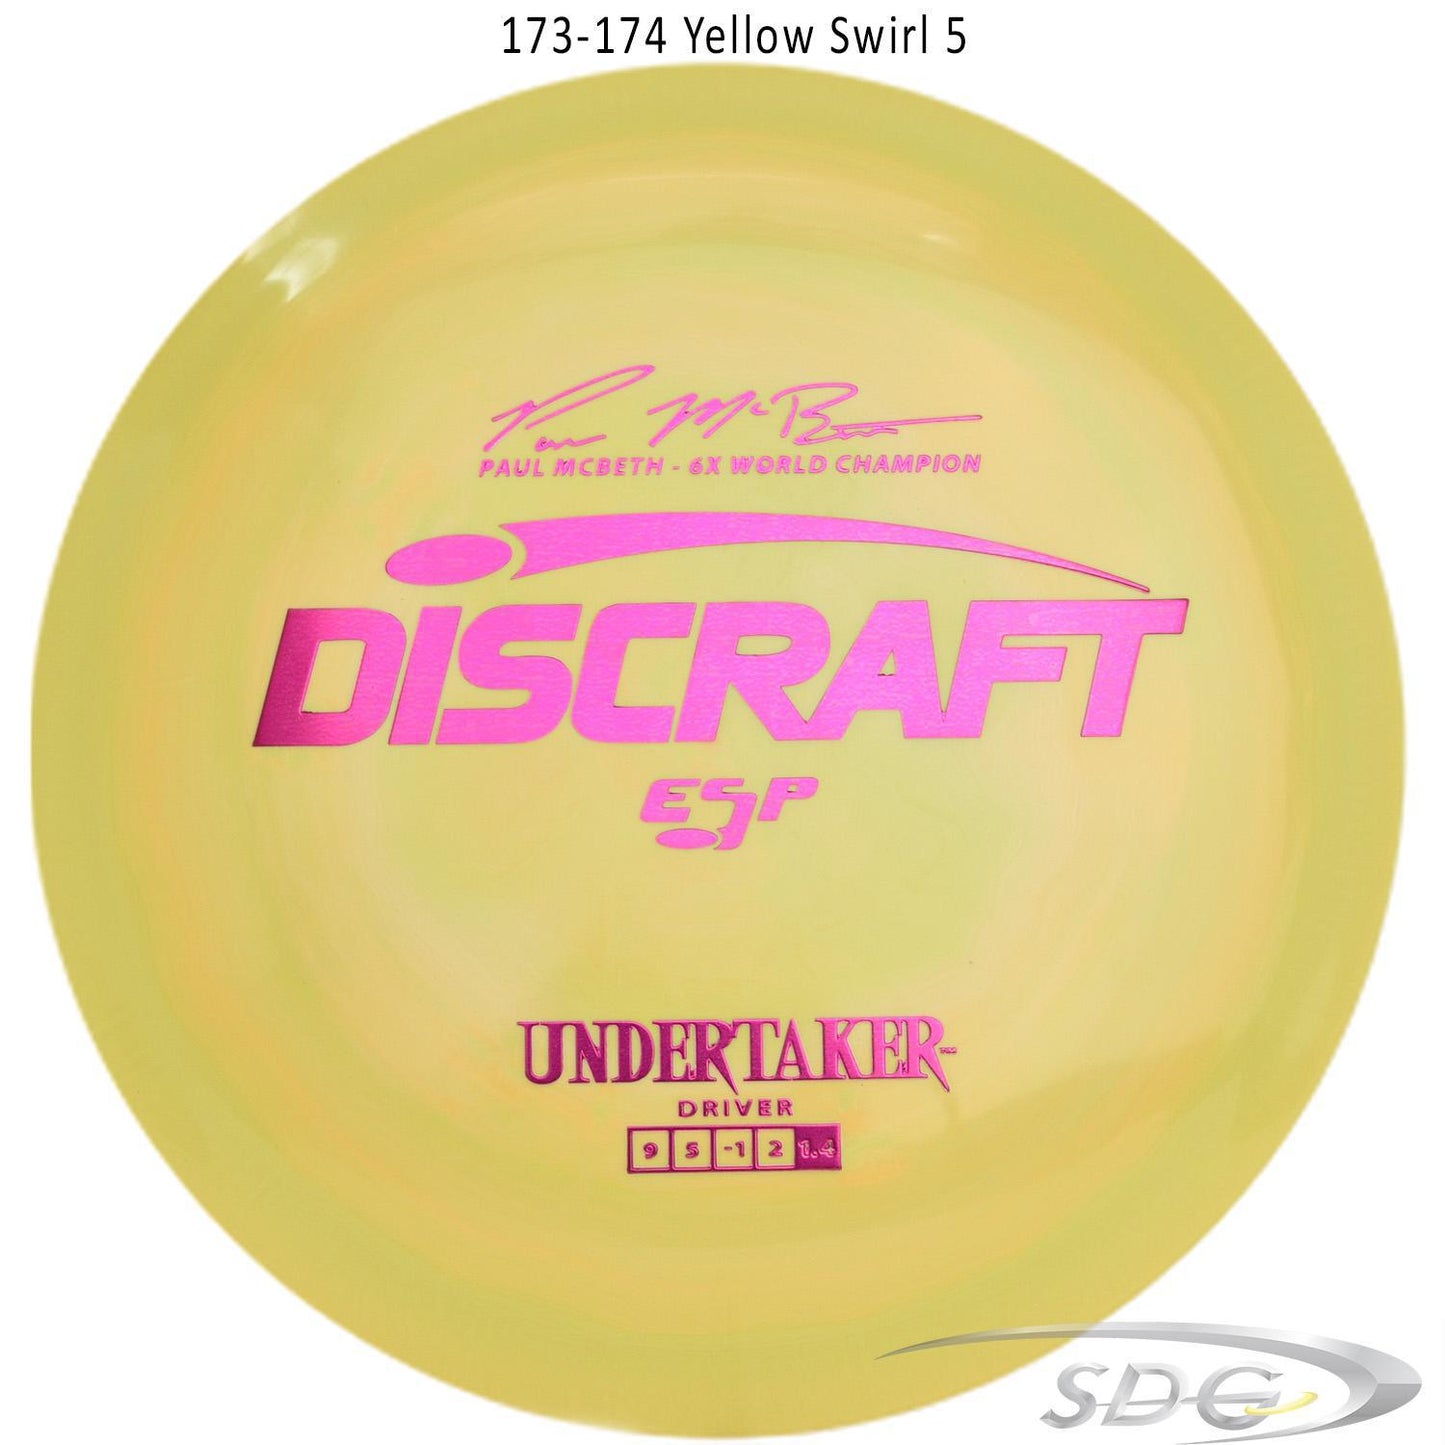 discraft-esp-undertaker-6x-paul-mcbeth-signature-series-disc-golf-distance-driver-176-173-weights 173-174 Yellow Swirl 5 